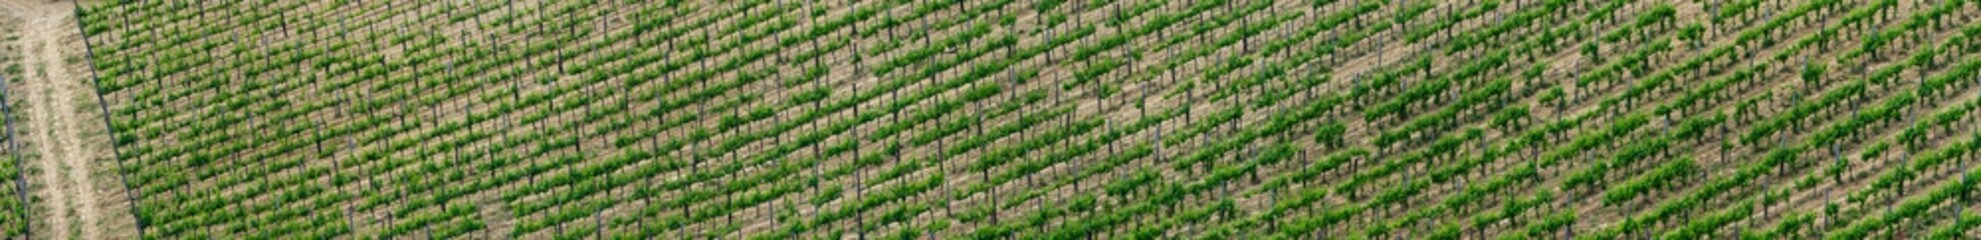 Tuscany Vineyard Wide Panorama in Spring